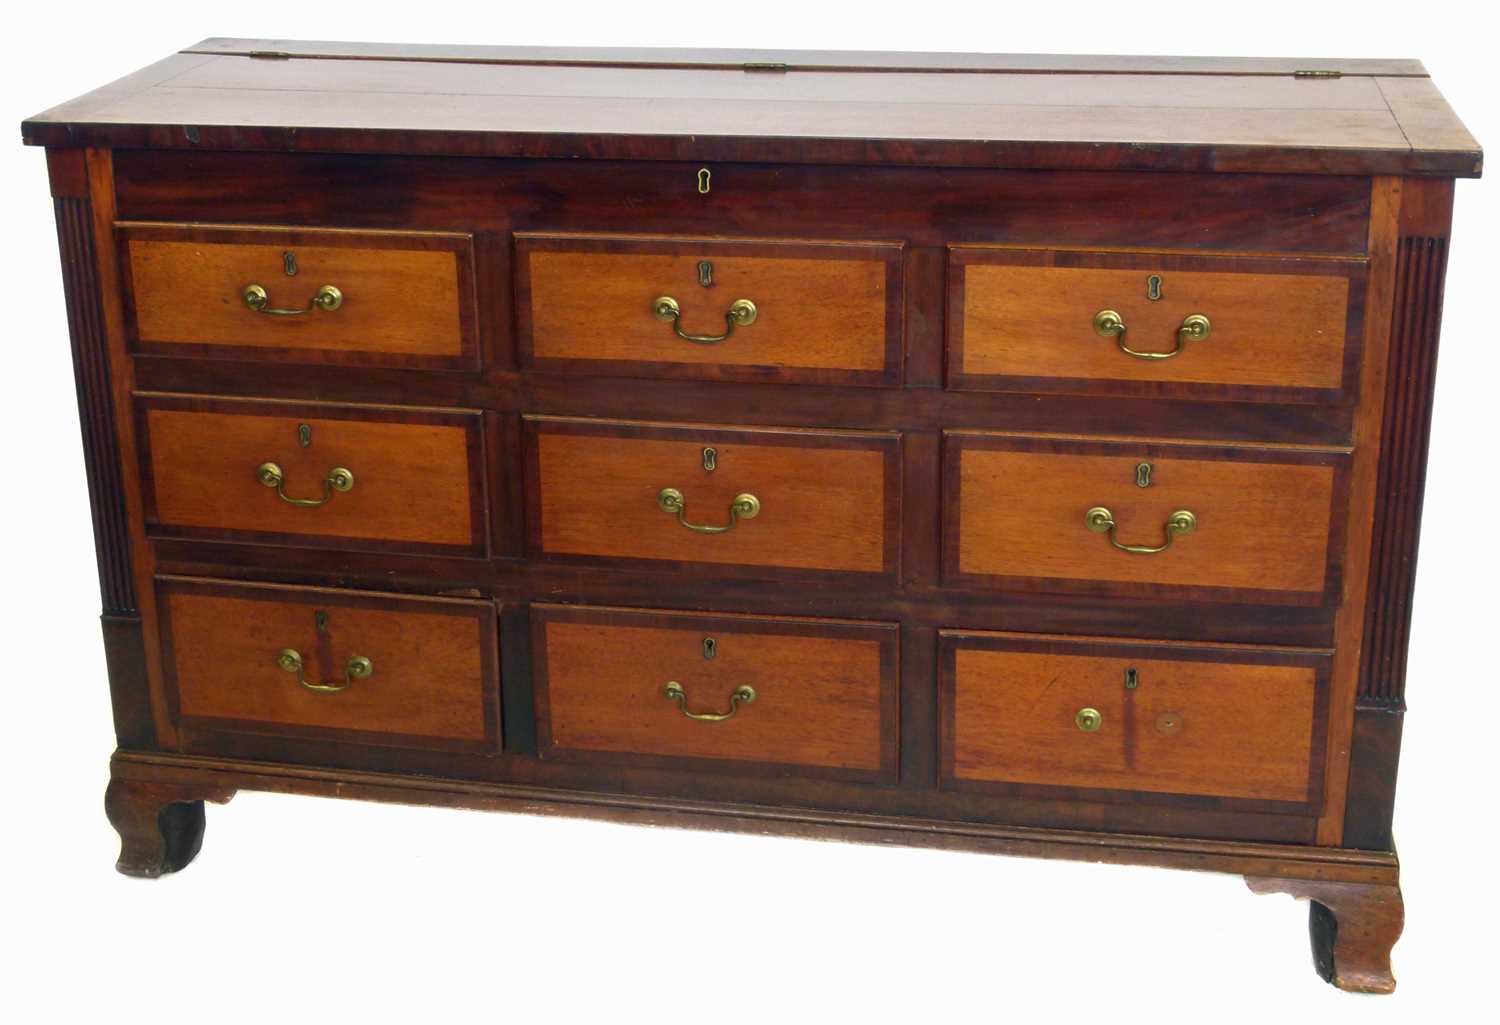 Early 19th-century oak and mahogany crossbanded Lancashire chest.